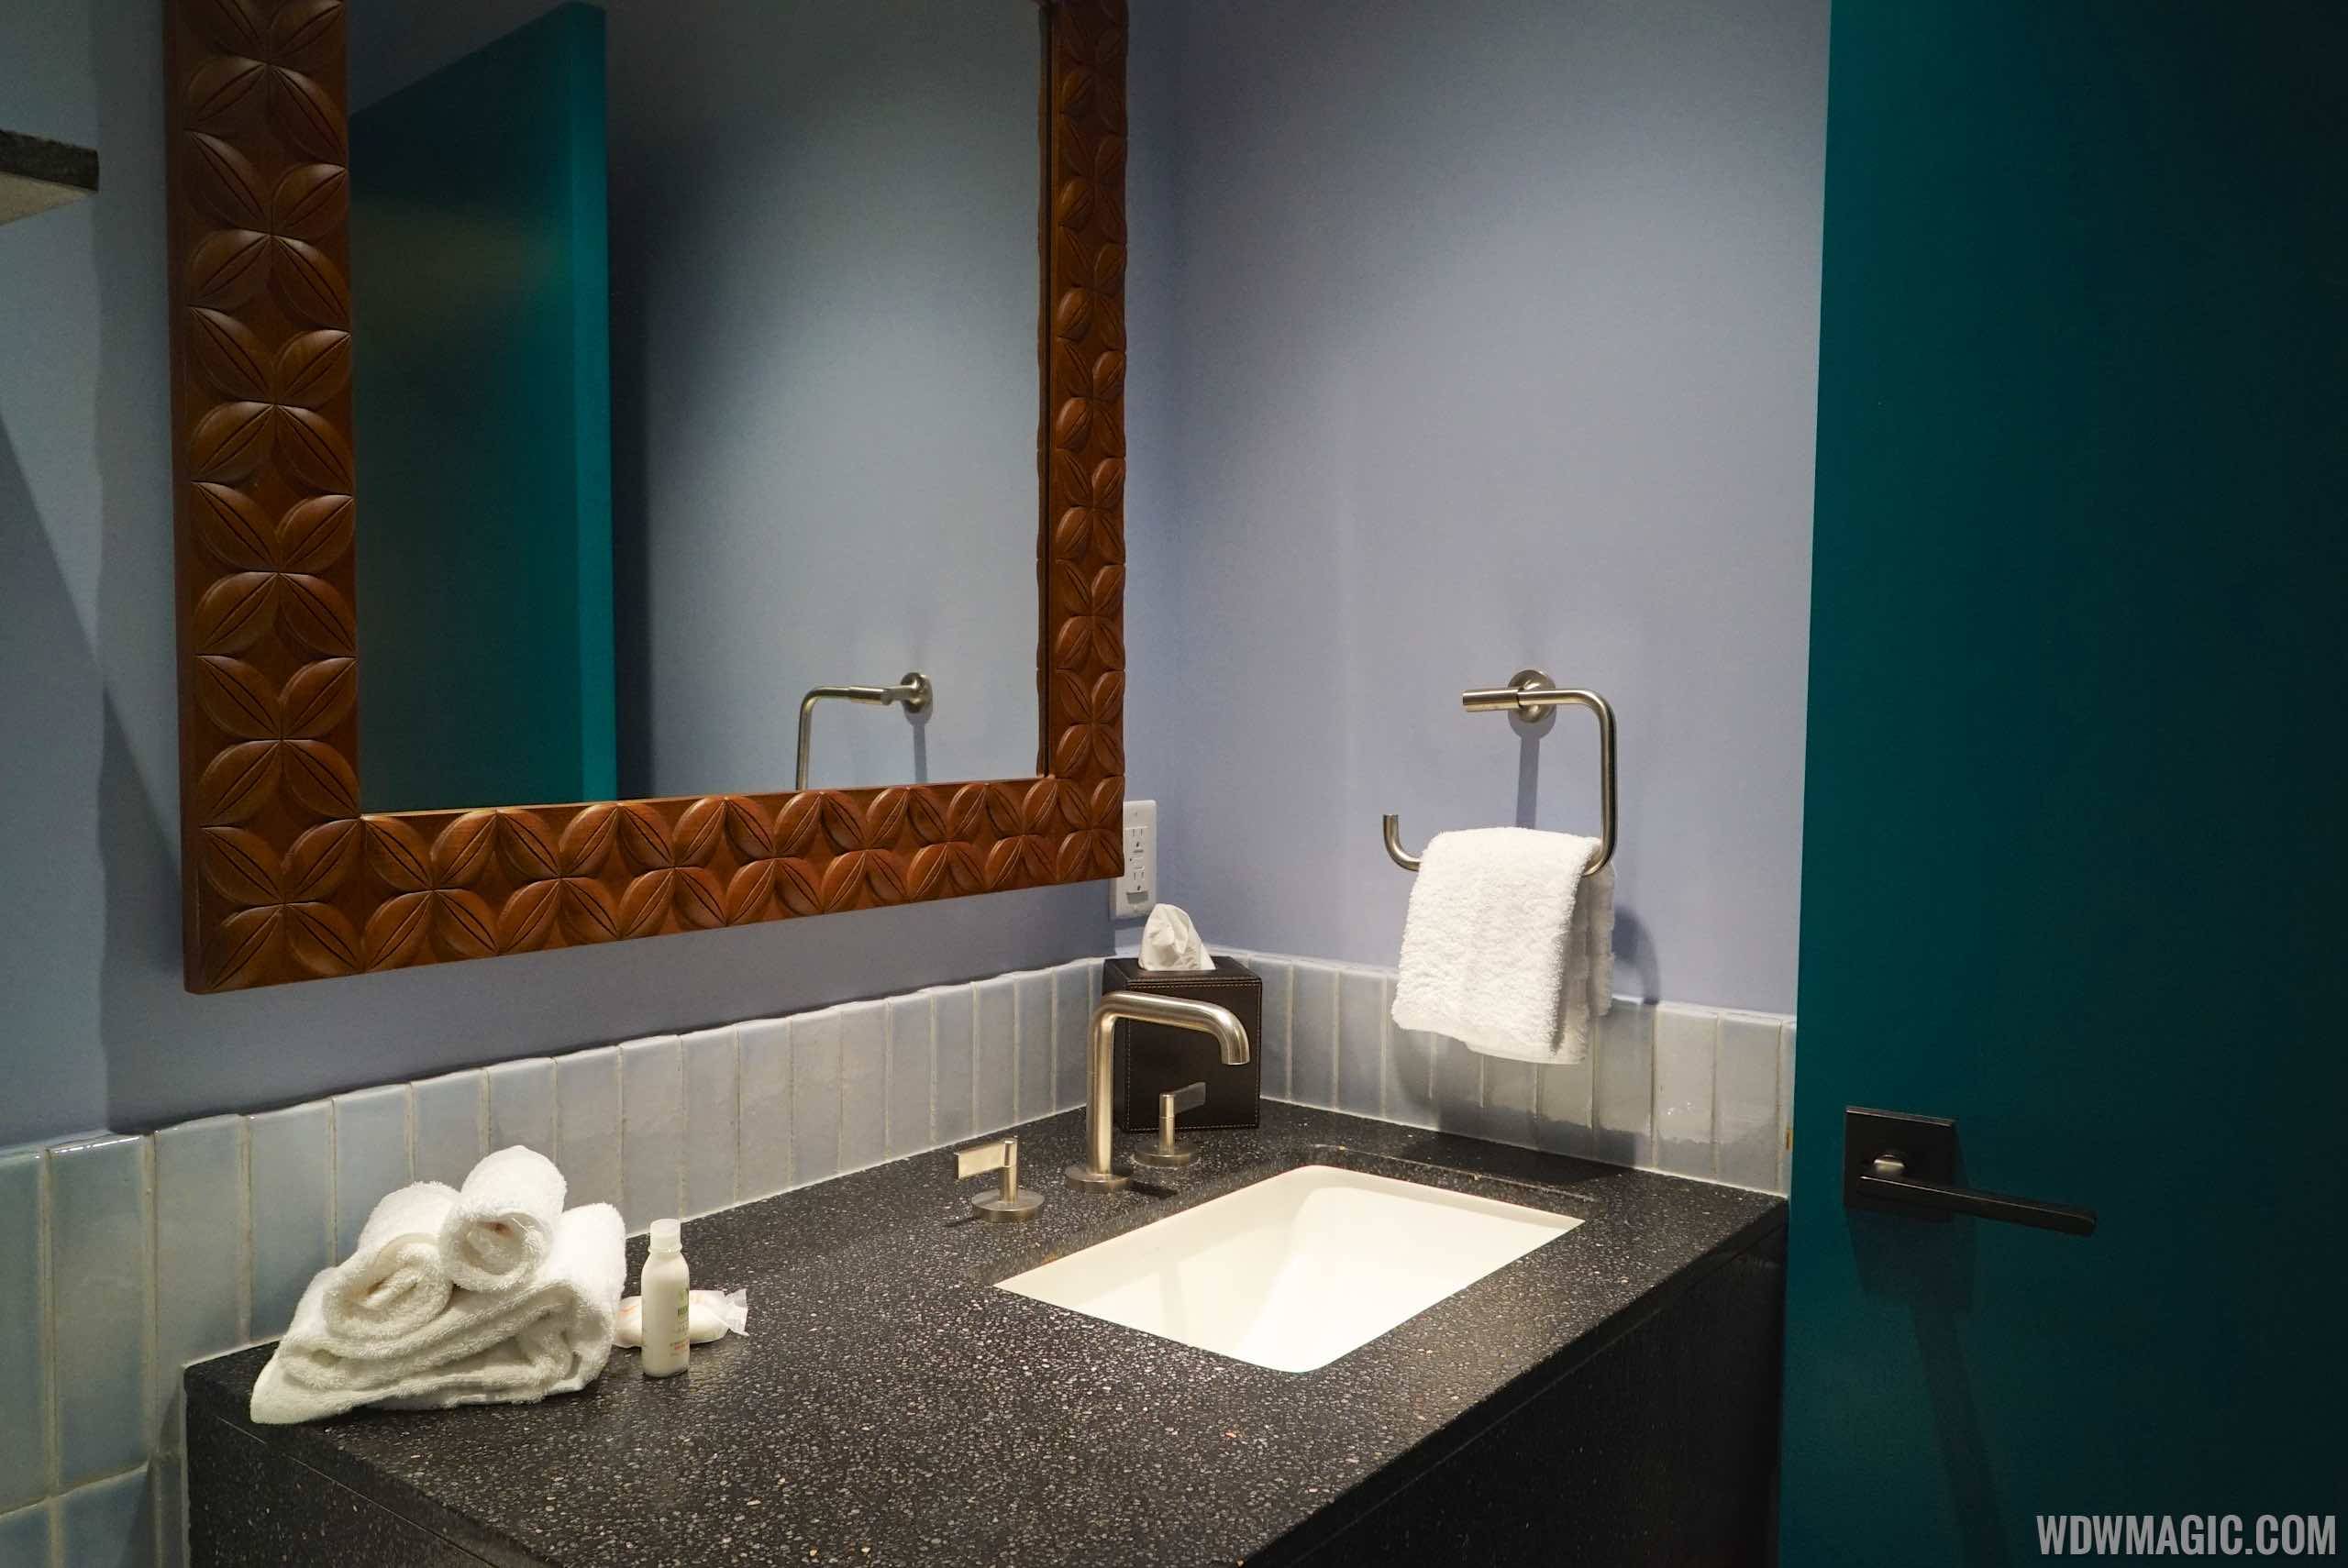 Disney's Polynesian Village Resort Bora Bora Bungalow - Secondary bathroom